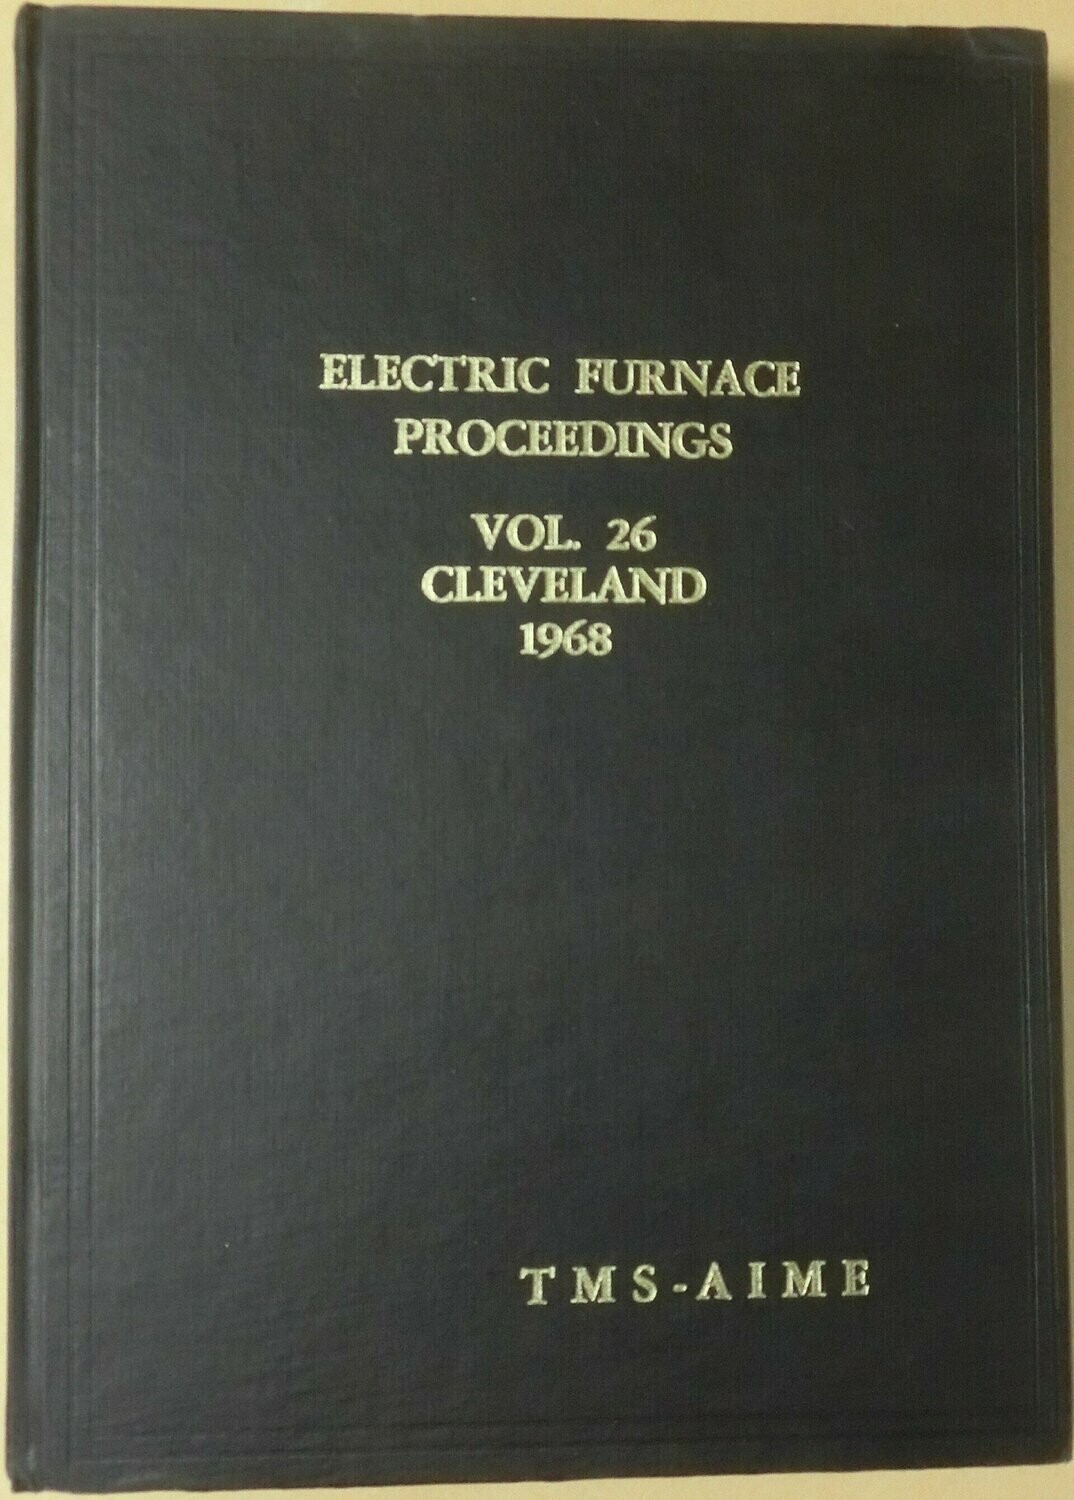 Electric furnace proceedings vol 26 Cleveland 1968